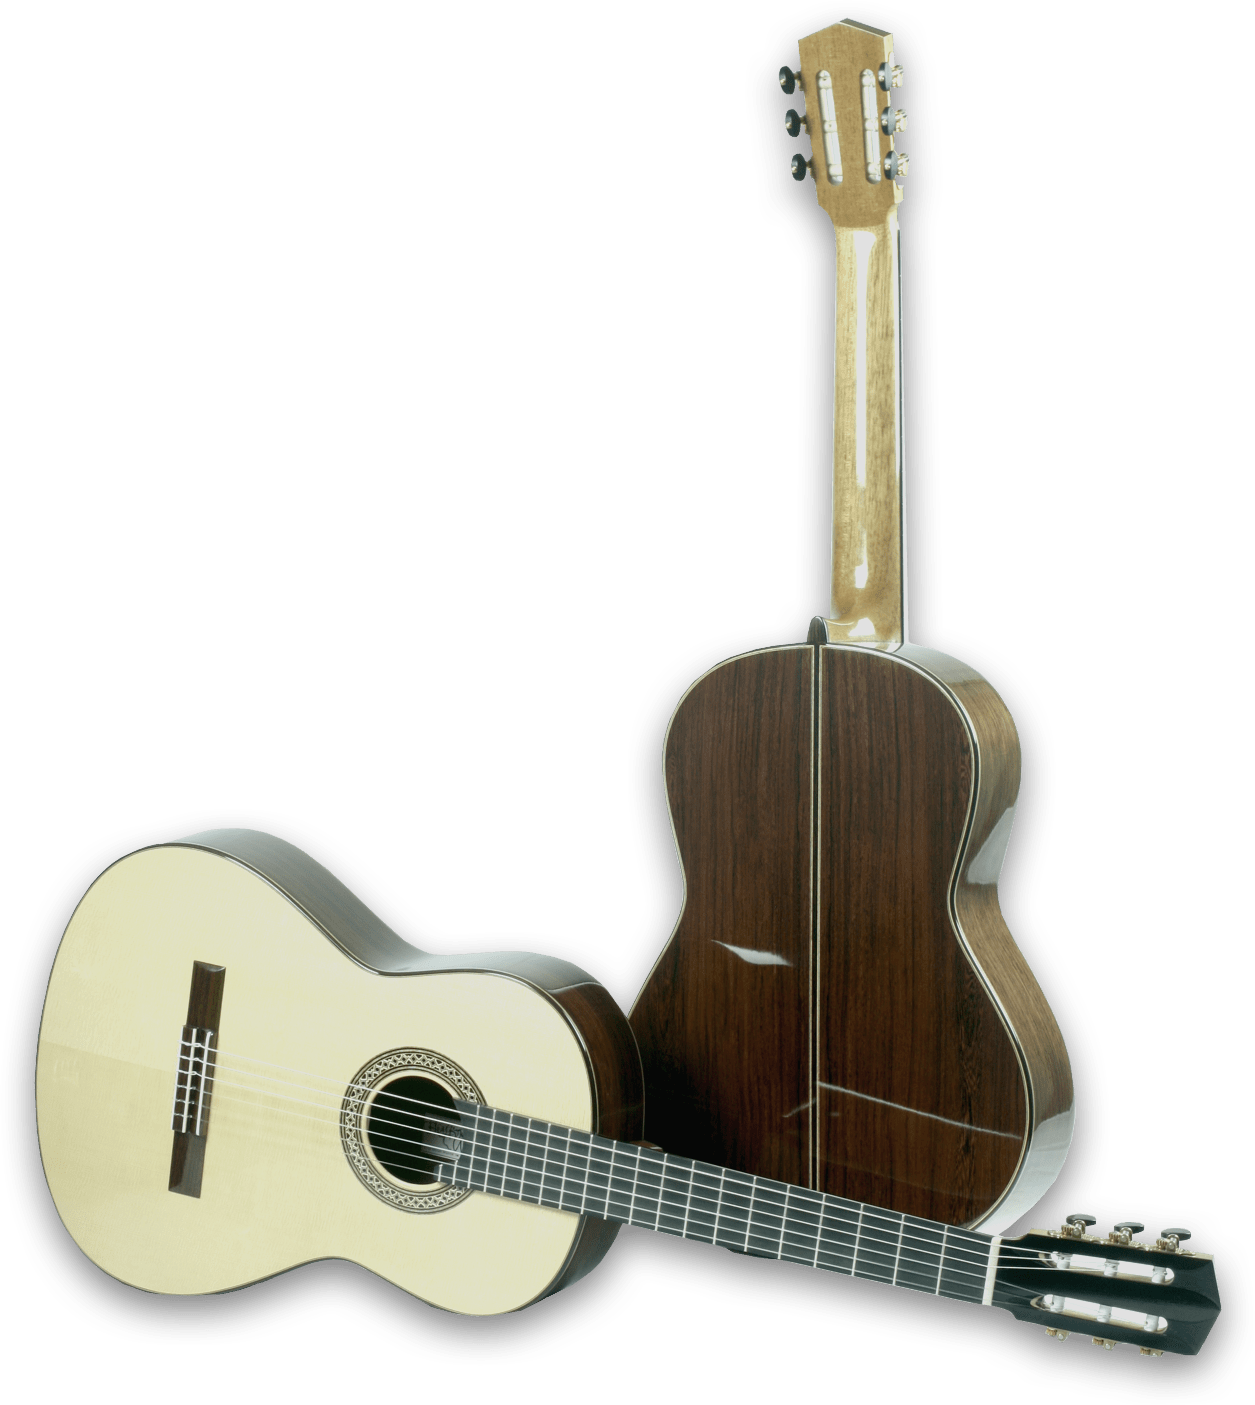 Guitars - Acoustic Guitar (1255x1405), Png Download